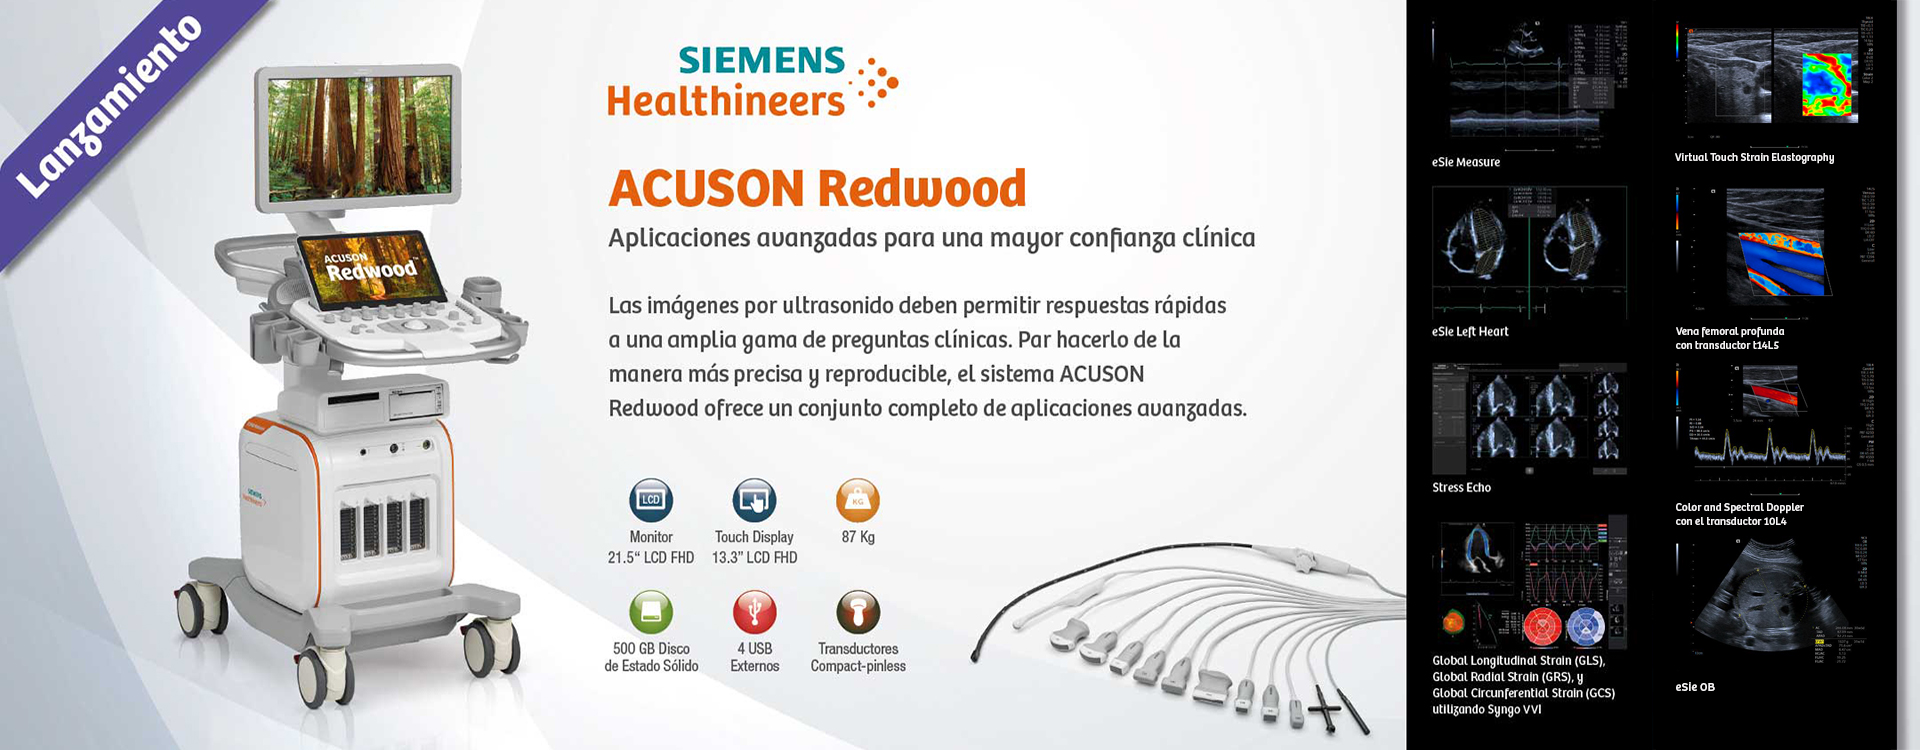 Siemens Acuson Redwood